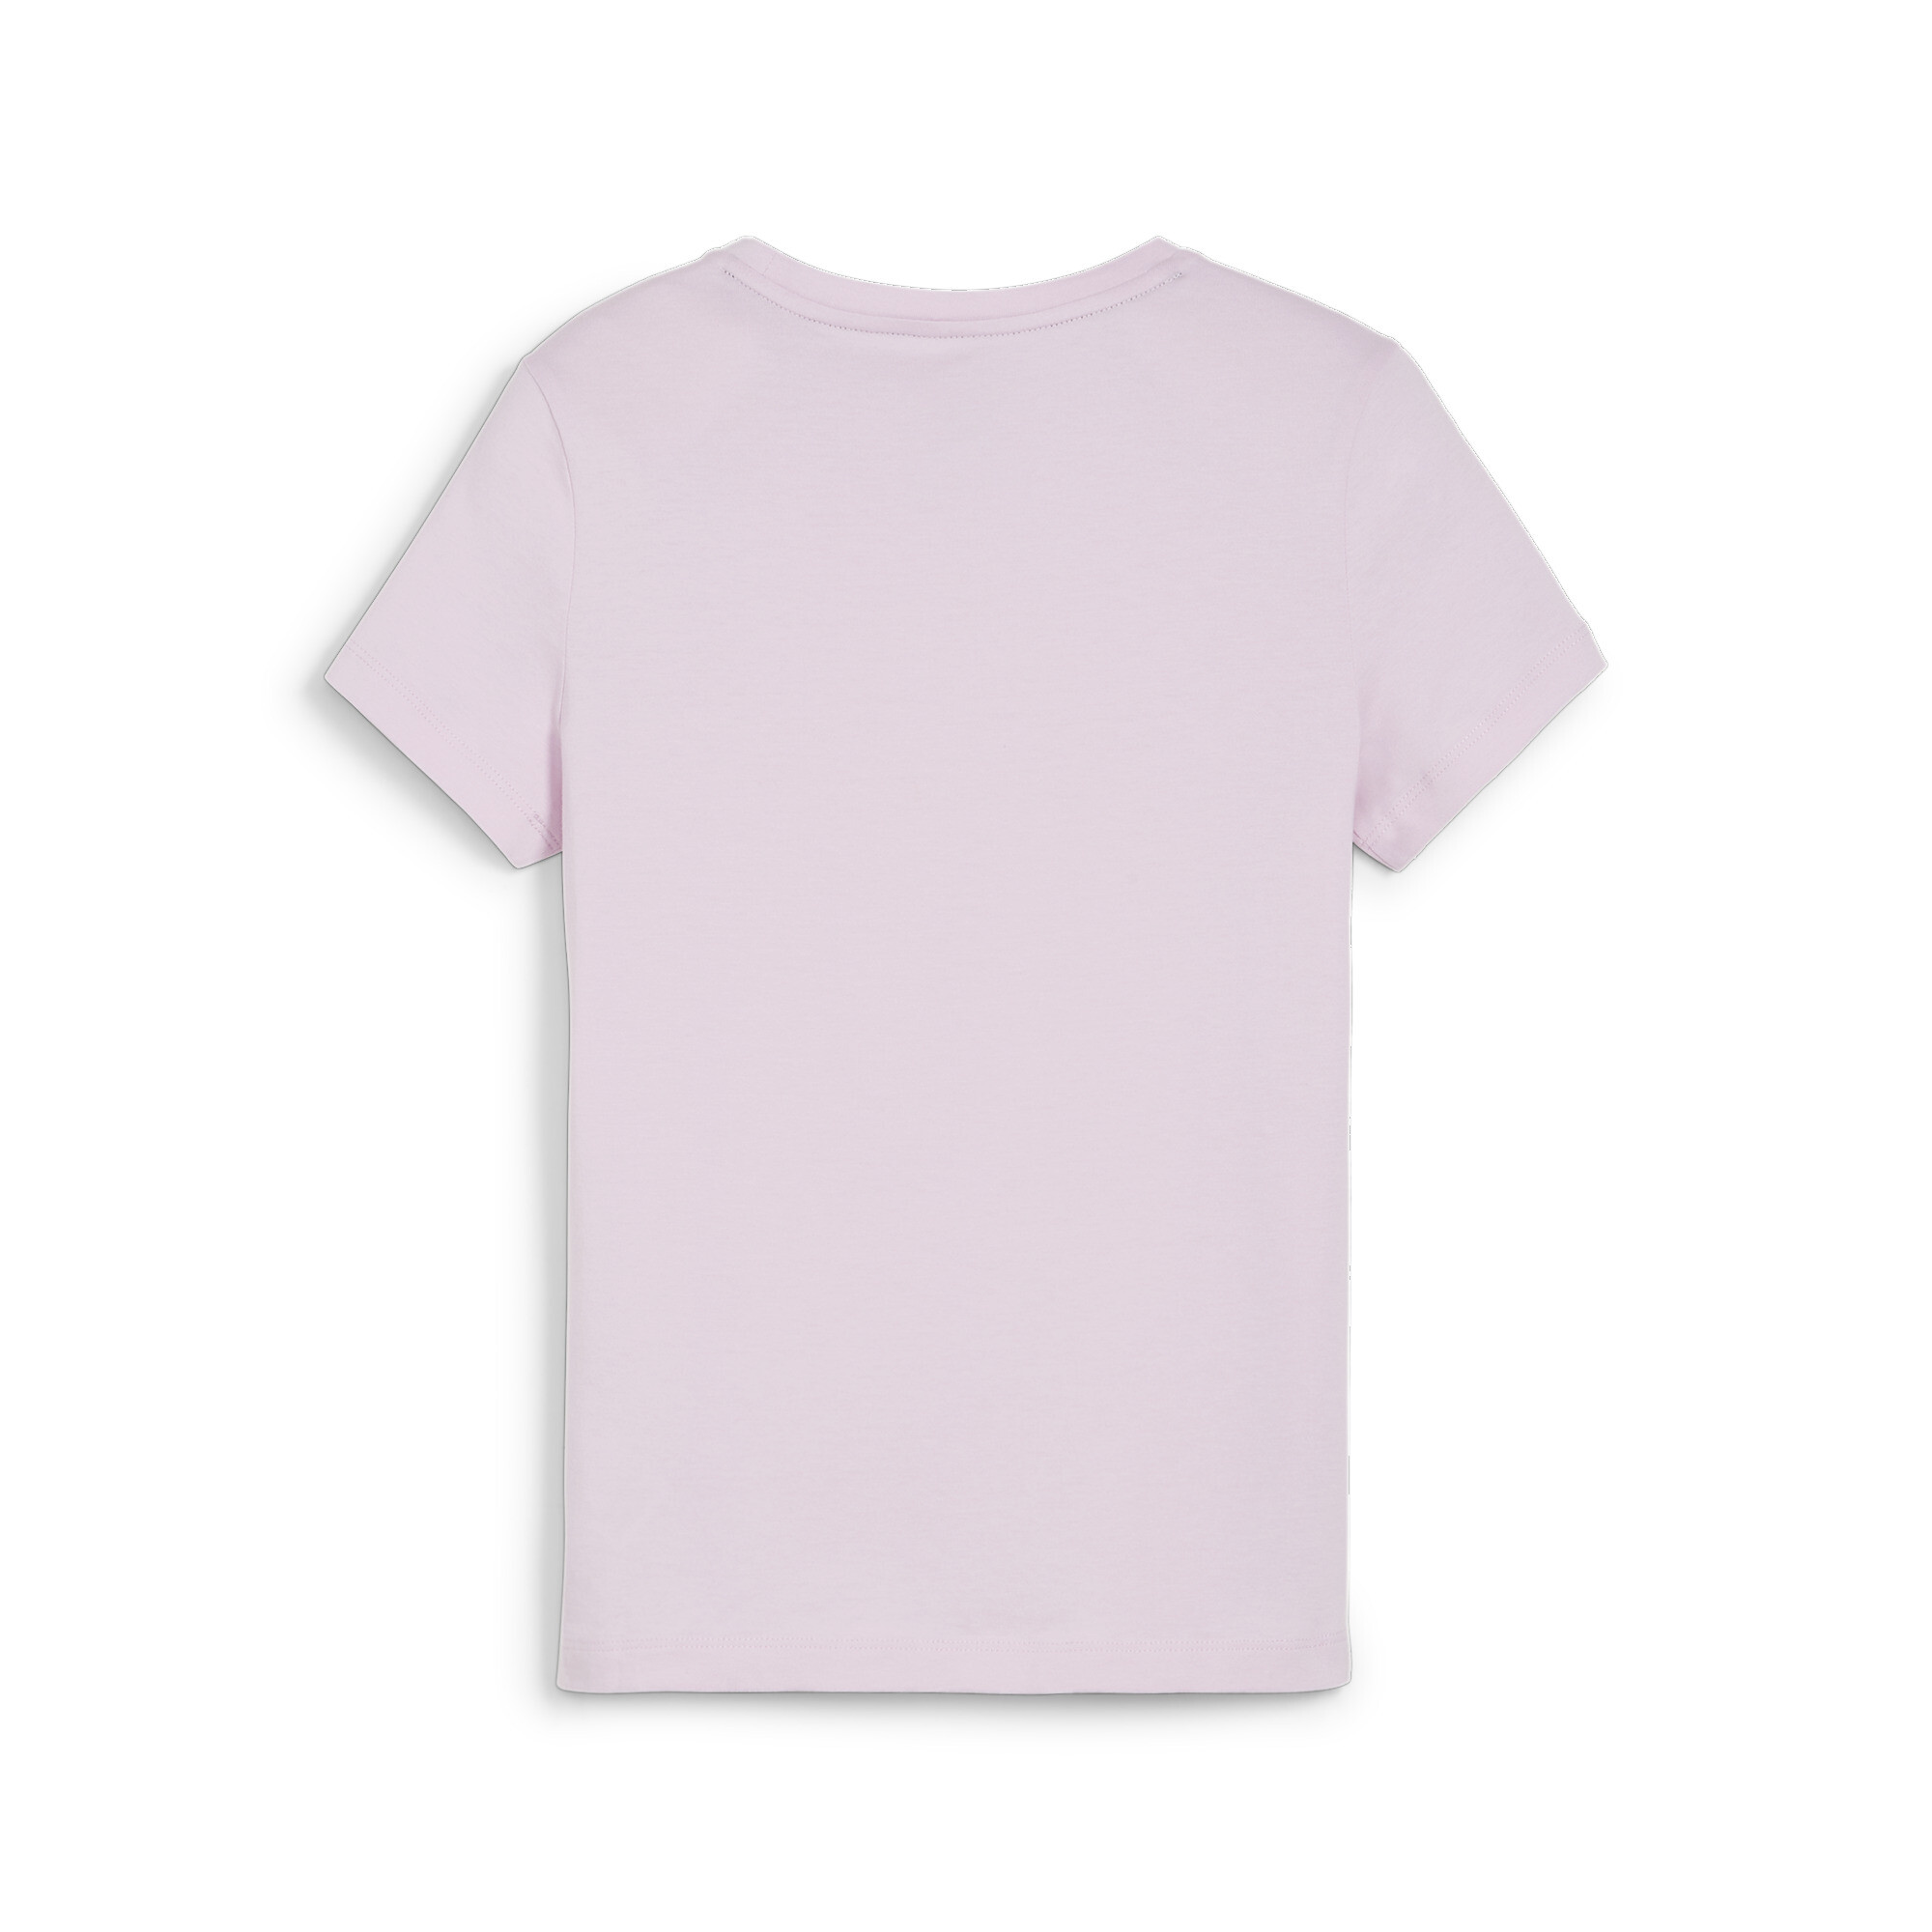 PUMA Essentials Logo T-Shirt In Purple, Size 5-6 Youth